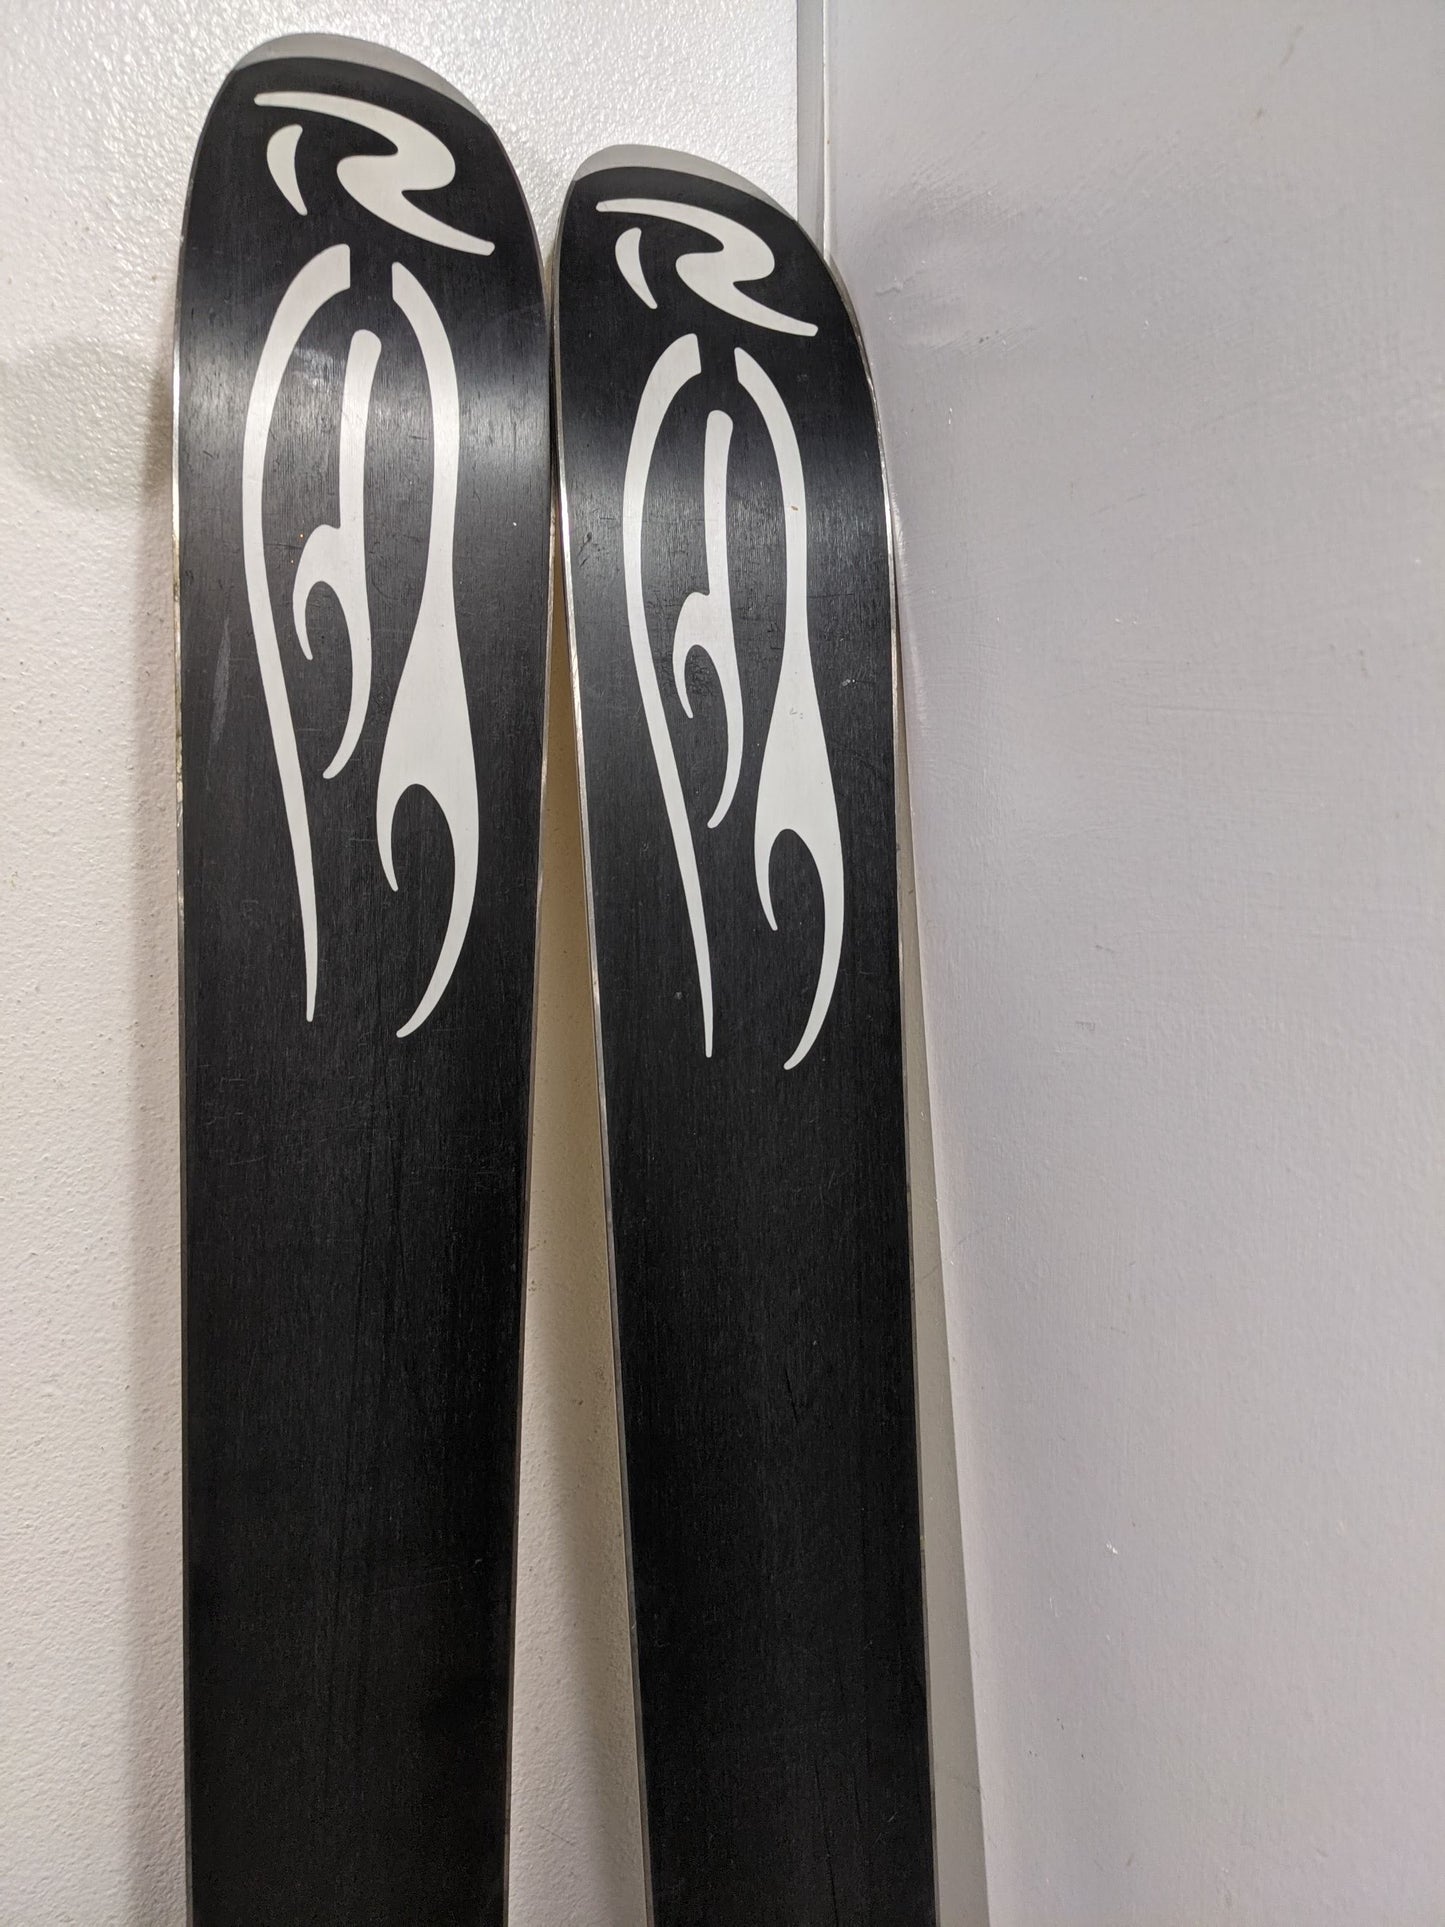 Rossignol B3 Bandit Skis w/Marker Bindings Size 195cm Yellow Used